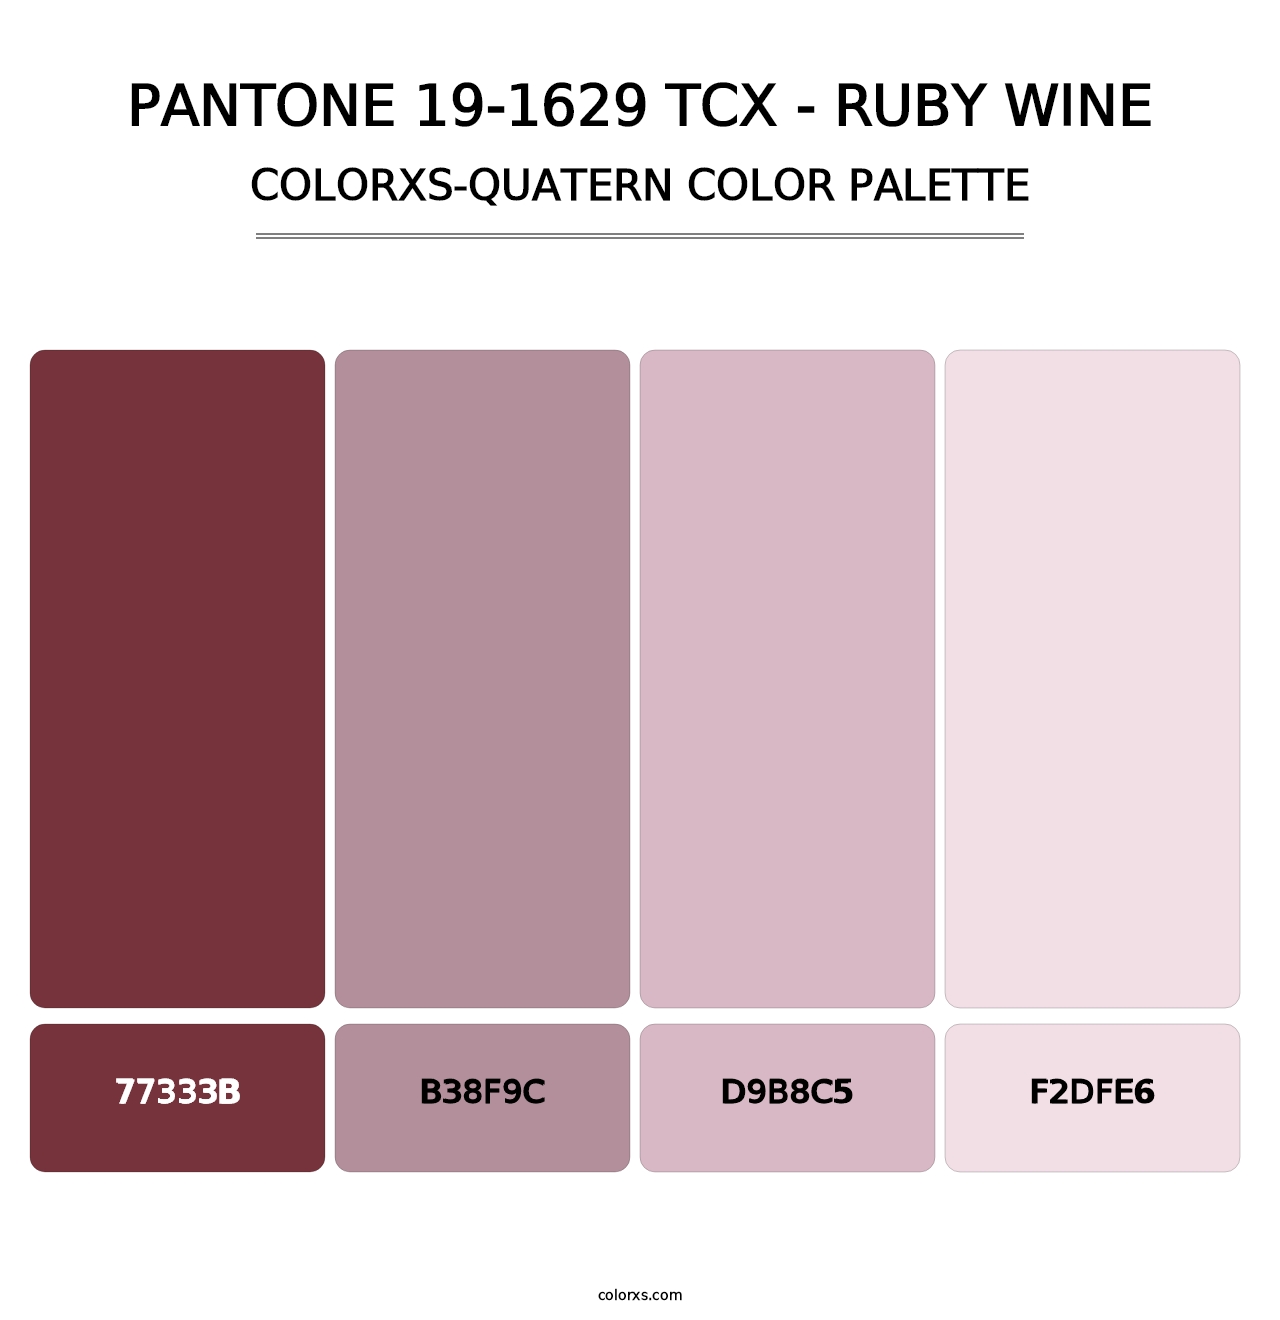 PANTONE 19-1629 TCX - Ruby Wine - Colorxs Quatern Palette